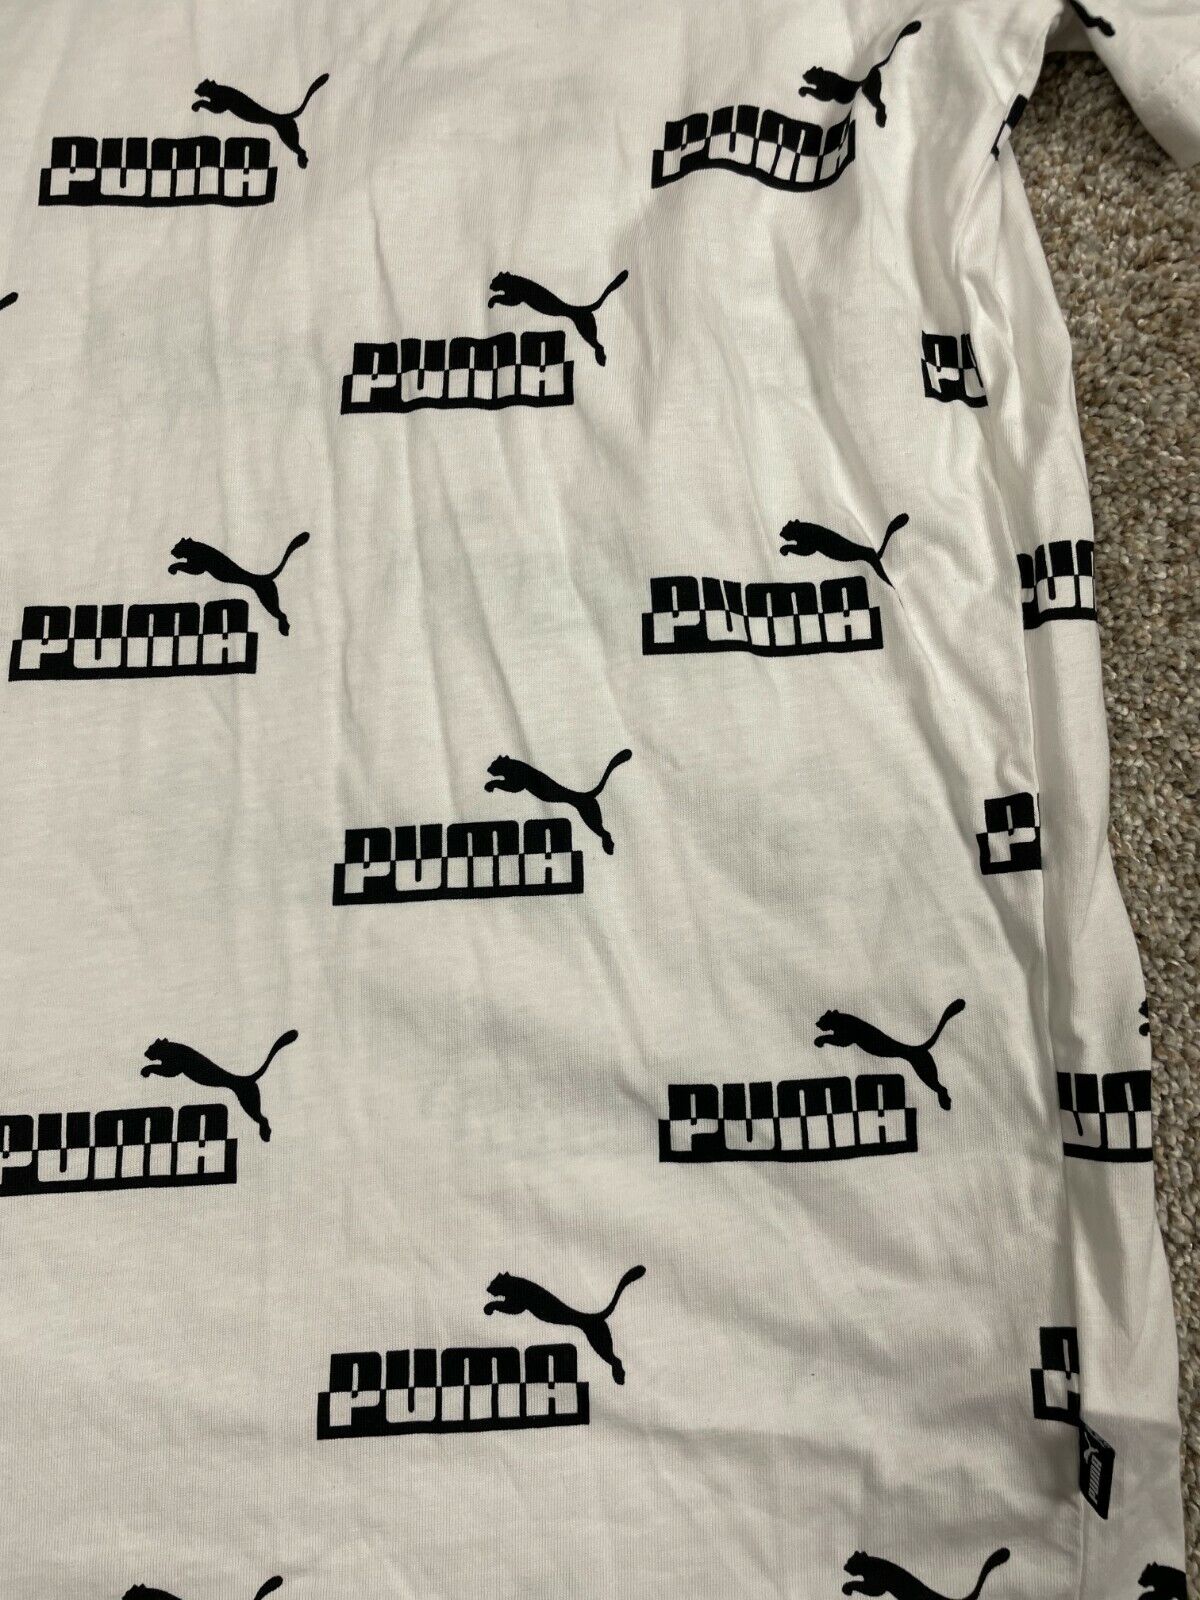 Puma All Over Print T-Shirt Mens Large Black & White Logos Casual 